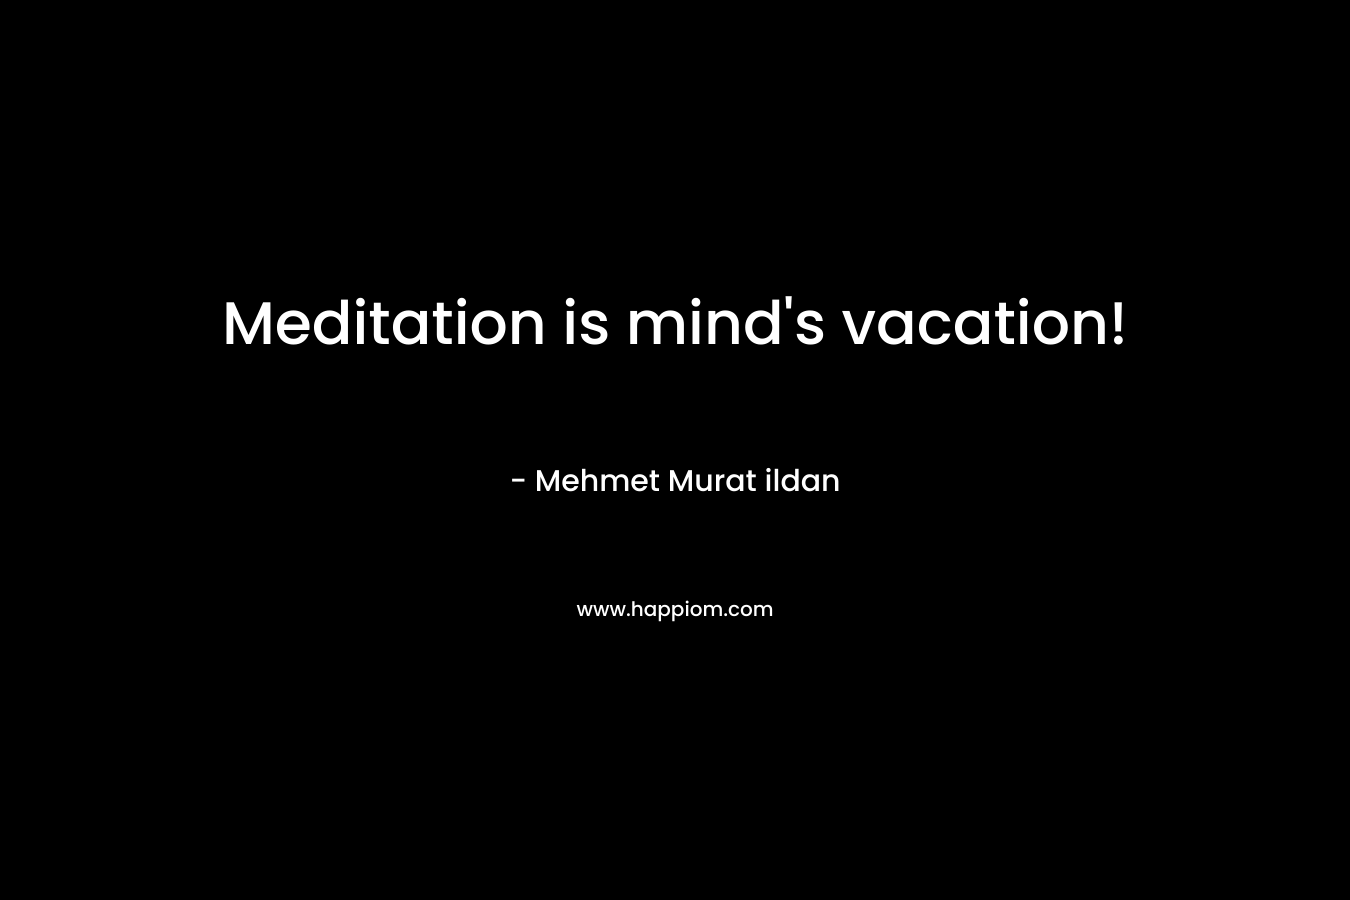 Meditation is mind's vacation!